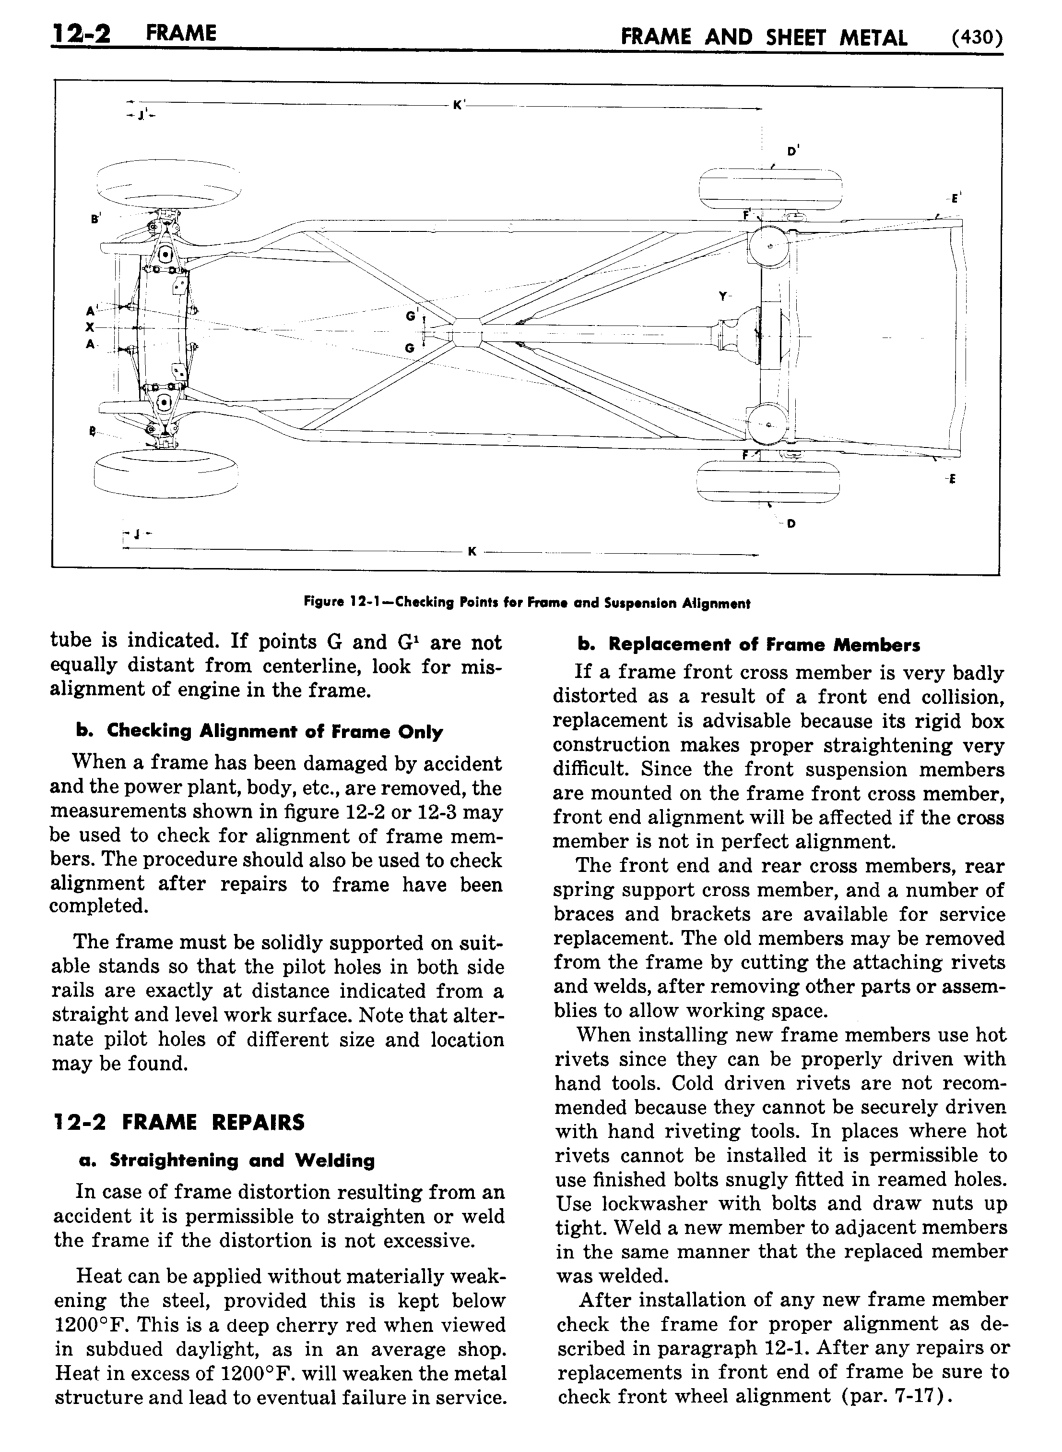 n_13 1954 Buick Shop Manual - Sheet Metal-002-002.jpg